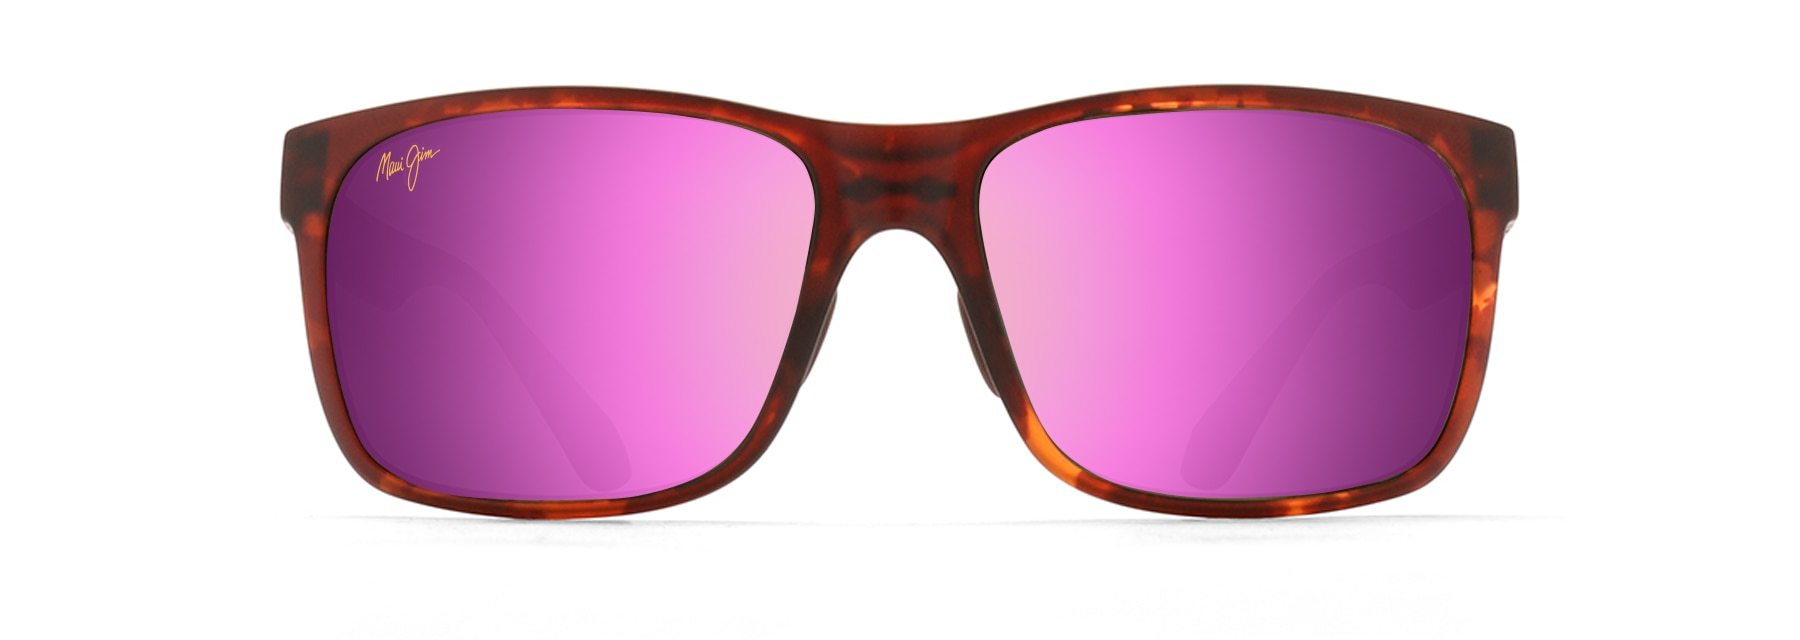 MyMaui Red Sands MM432-036 Sunglasses